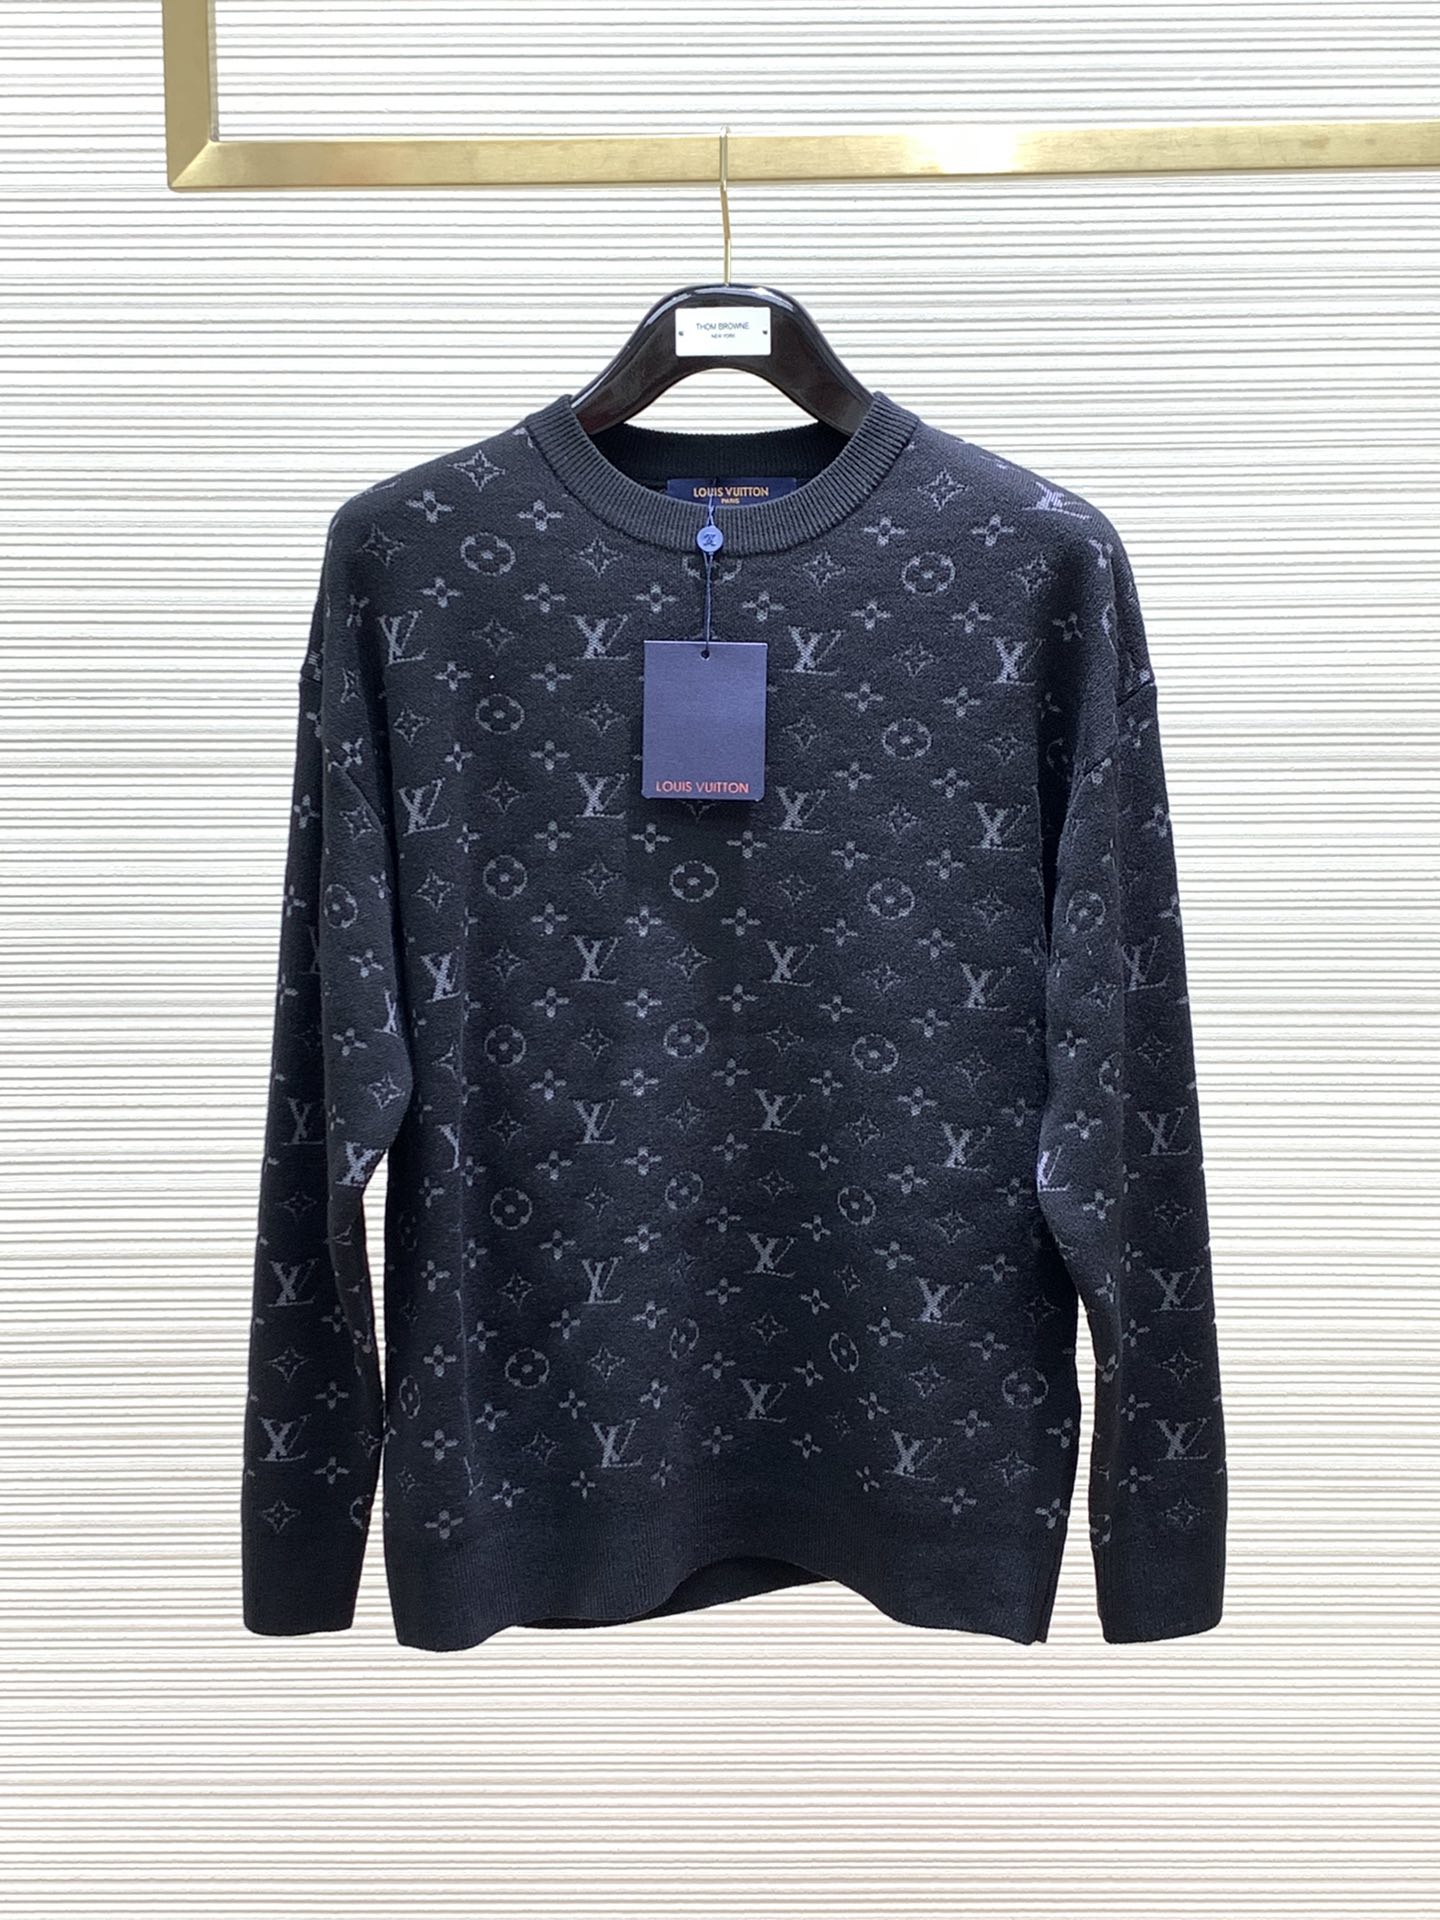 Fake
 Louis Vuitton Clothing Sweatshirts At Cheap Price
 Printing Fall/Winter Collection Fashion Long Sleeve